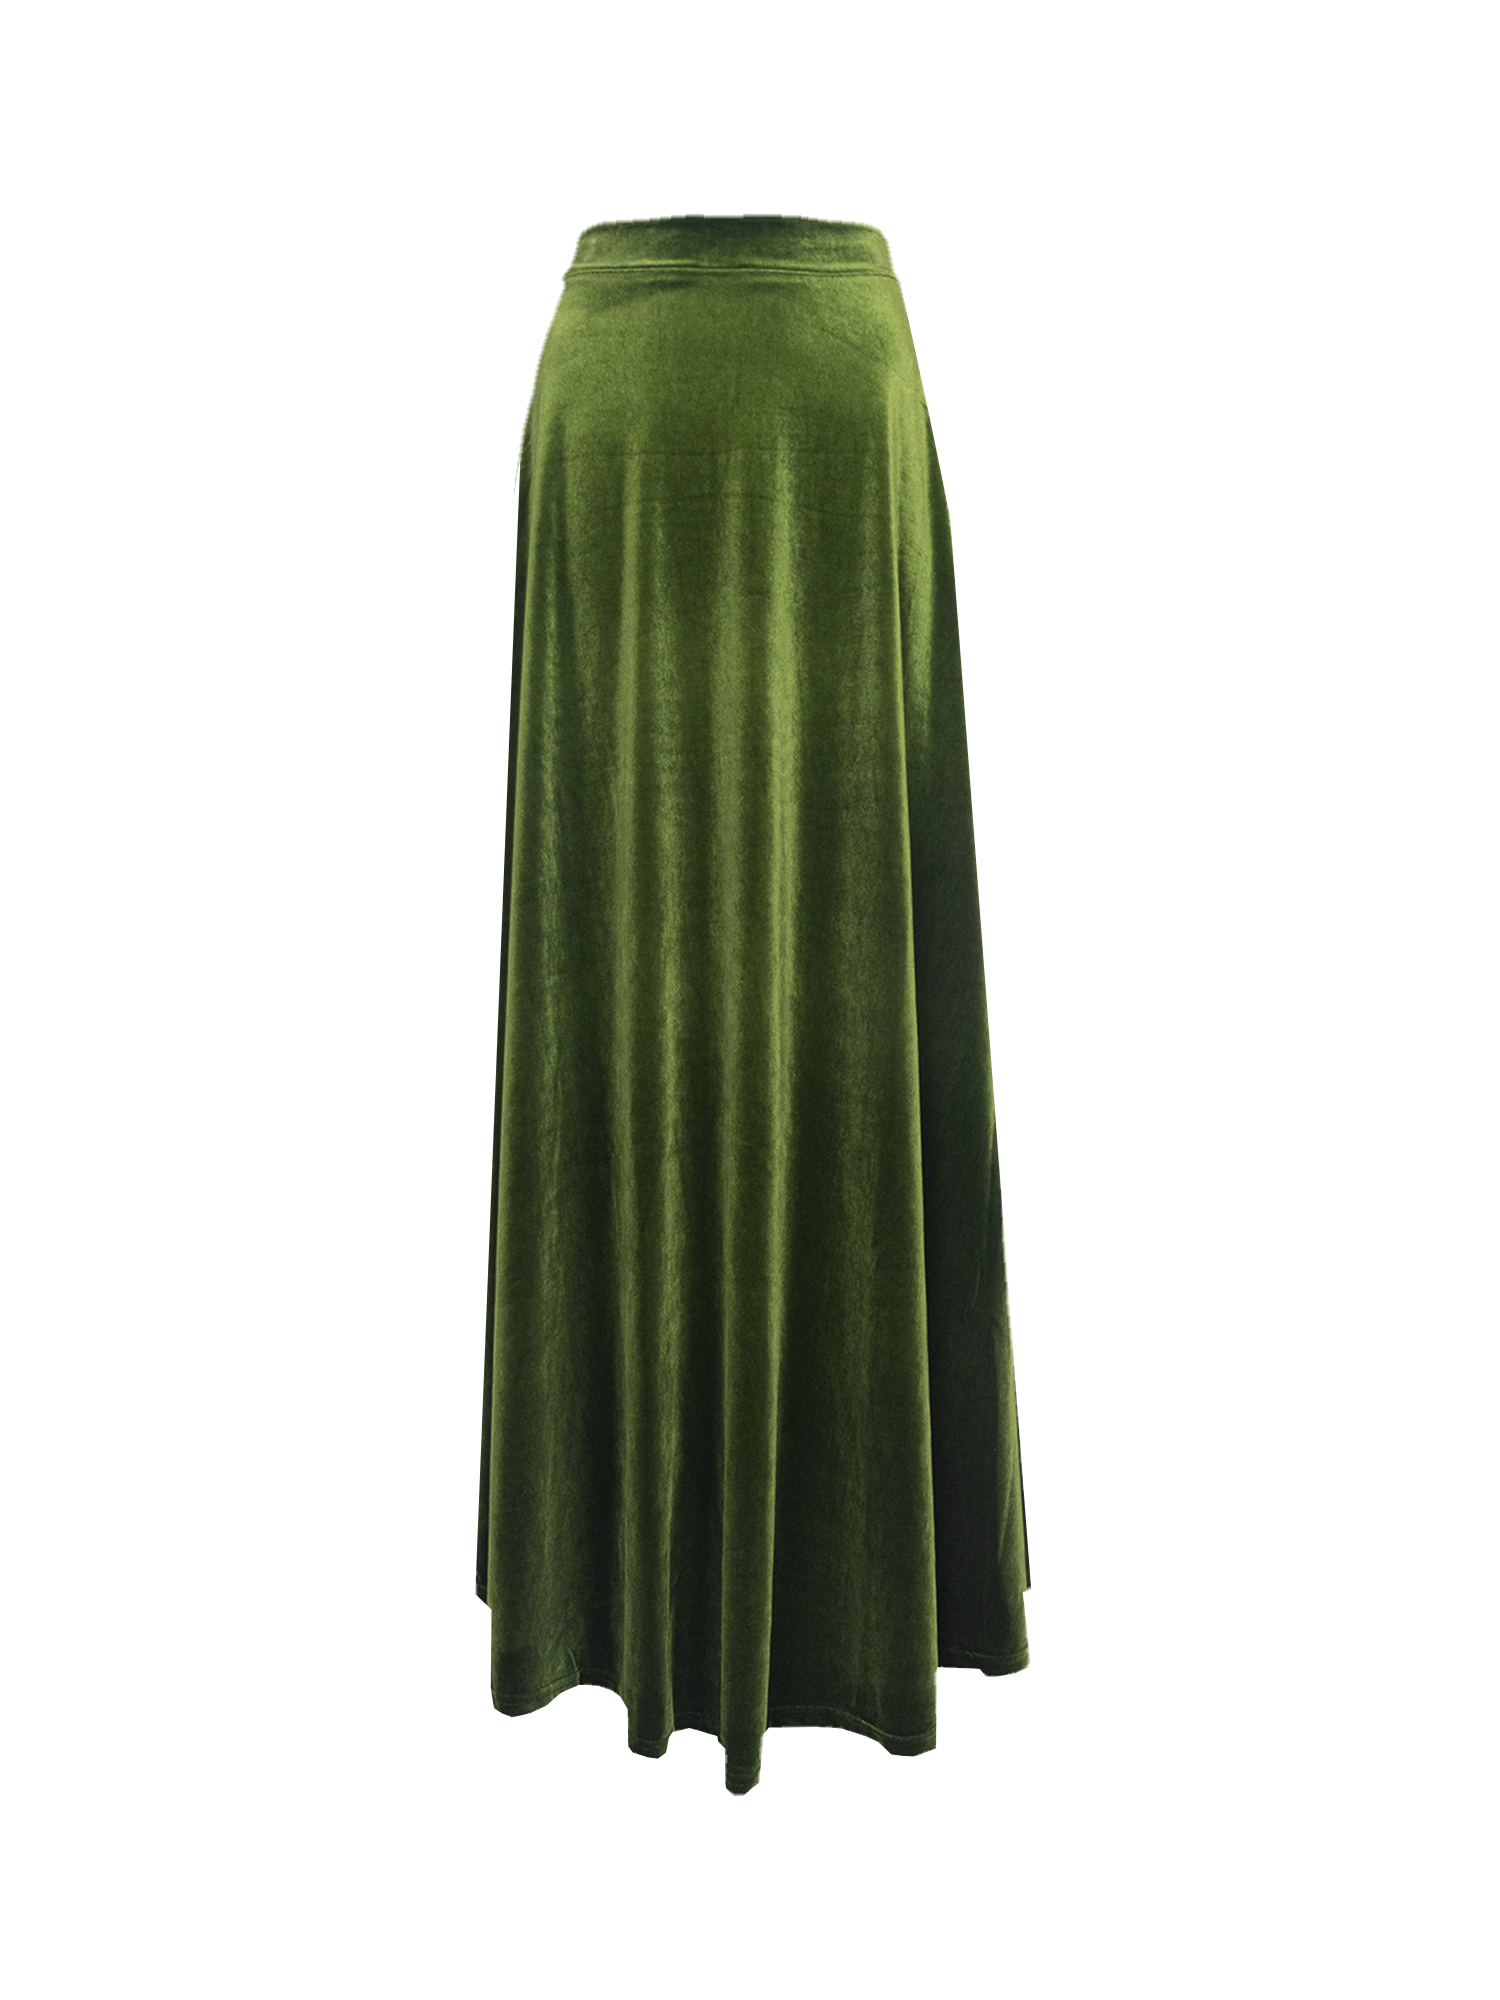 TOSCA - long chenille green maxi skirt